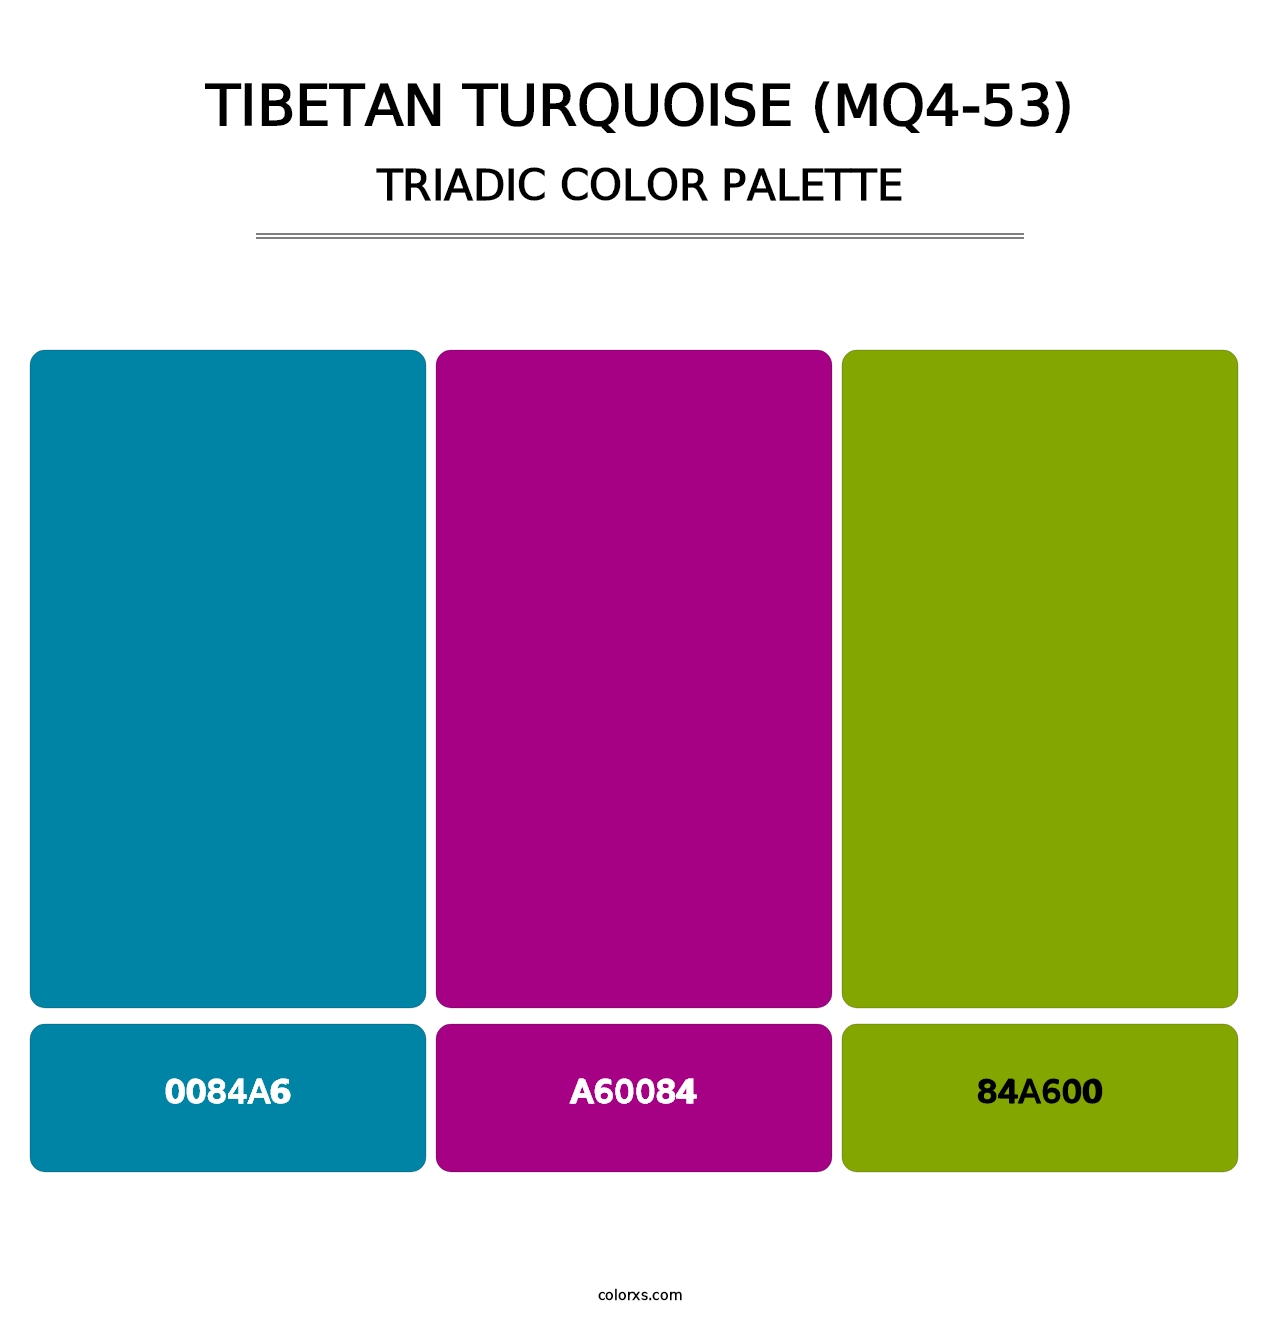 Tibetan Turquoise (MQ4-53) - Triadic Color Palette